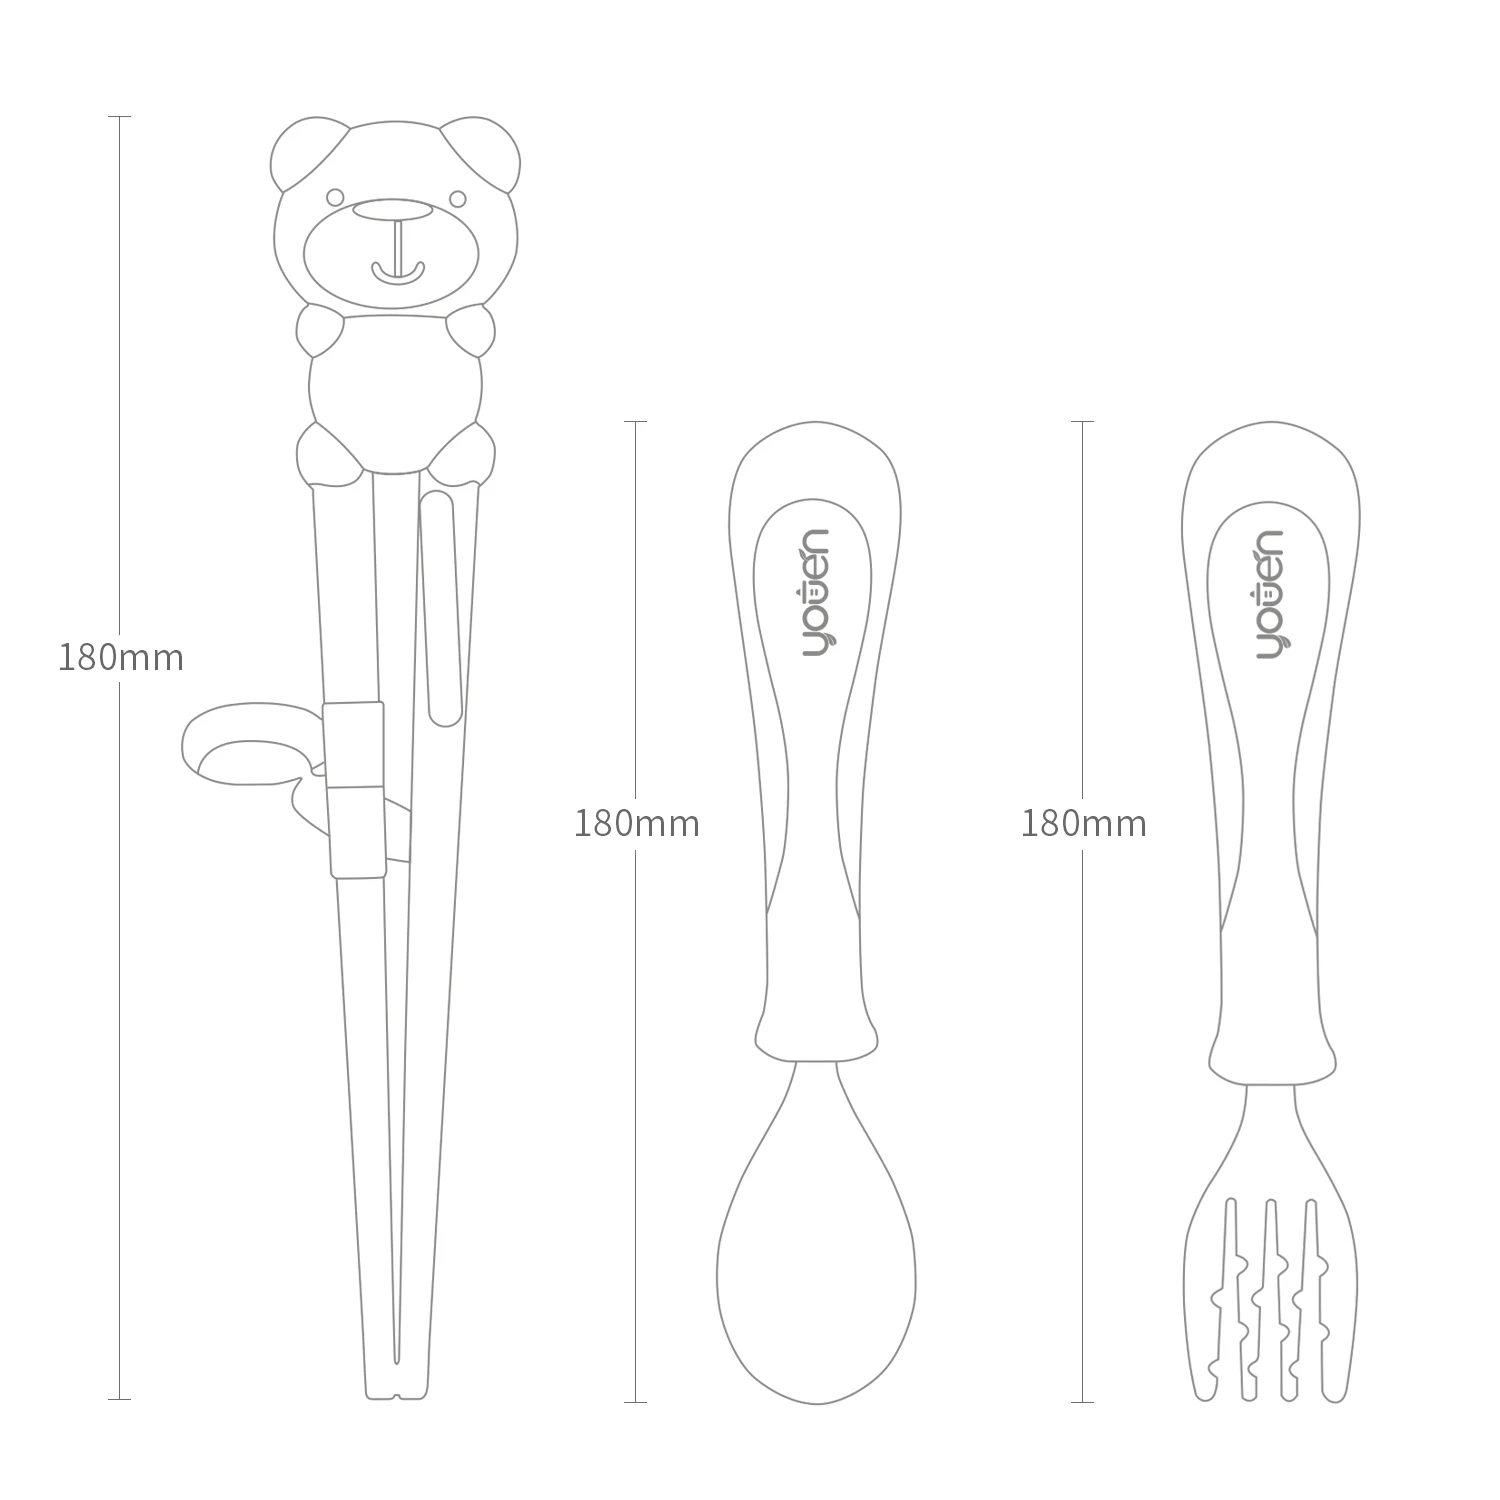 Blue 3pcs Youen kids forks,Training Chopsticks Flat Edge Spoon & Grooved Fork Set with Case for Right-hand Children Kids 